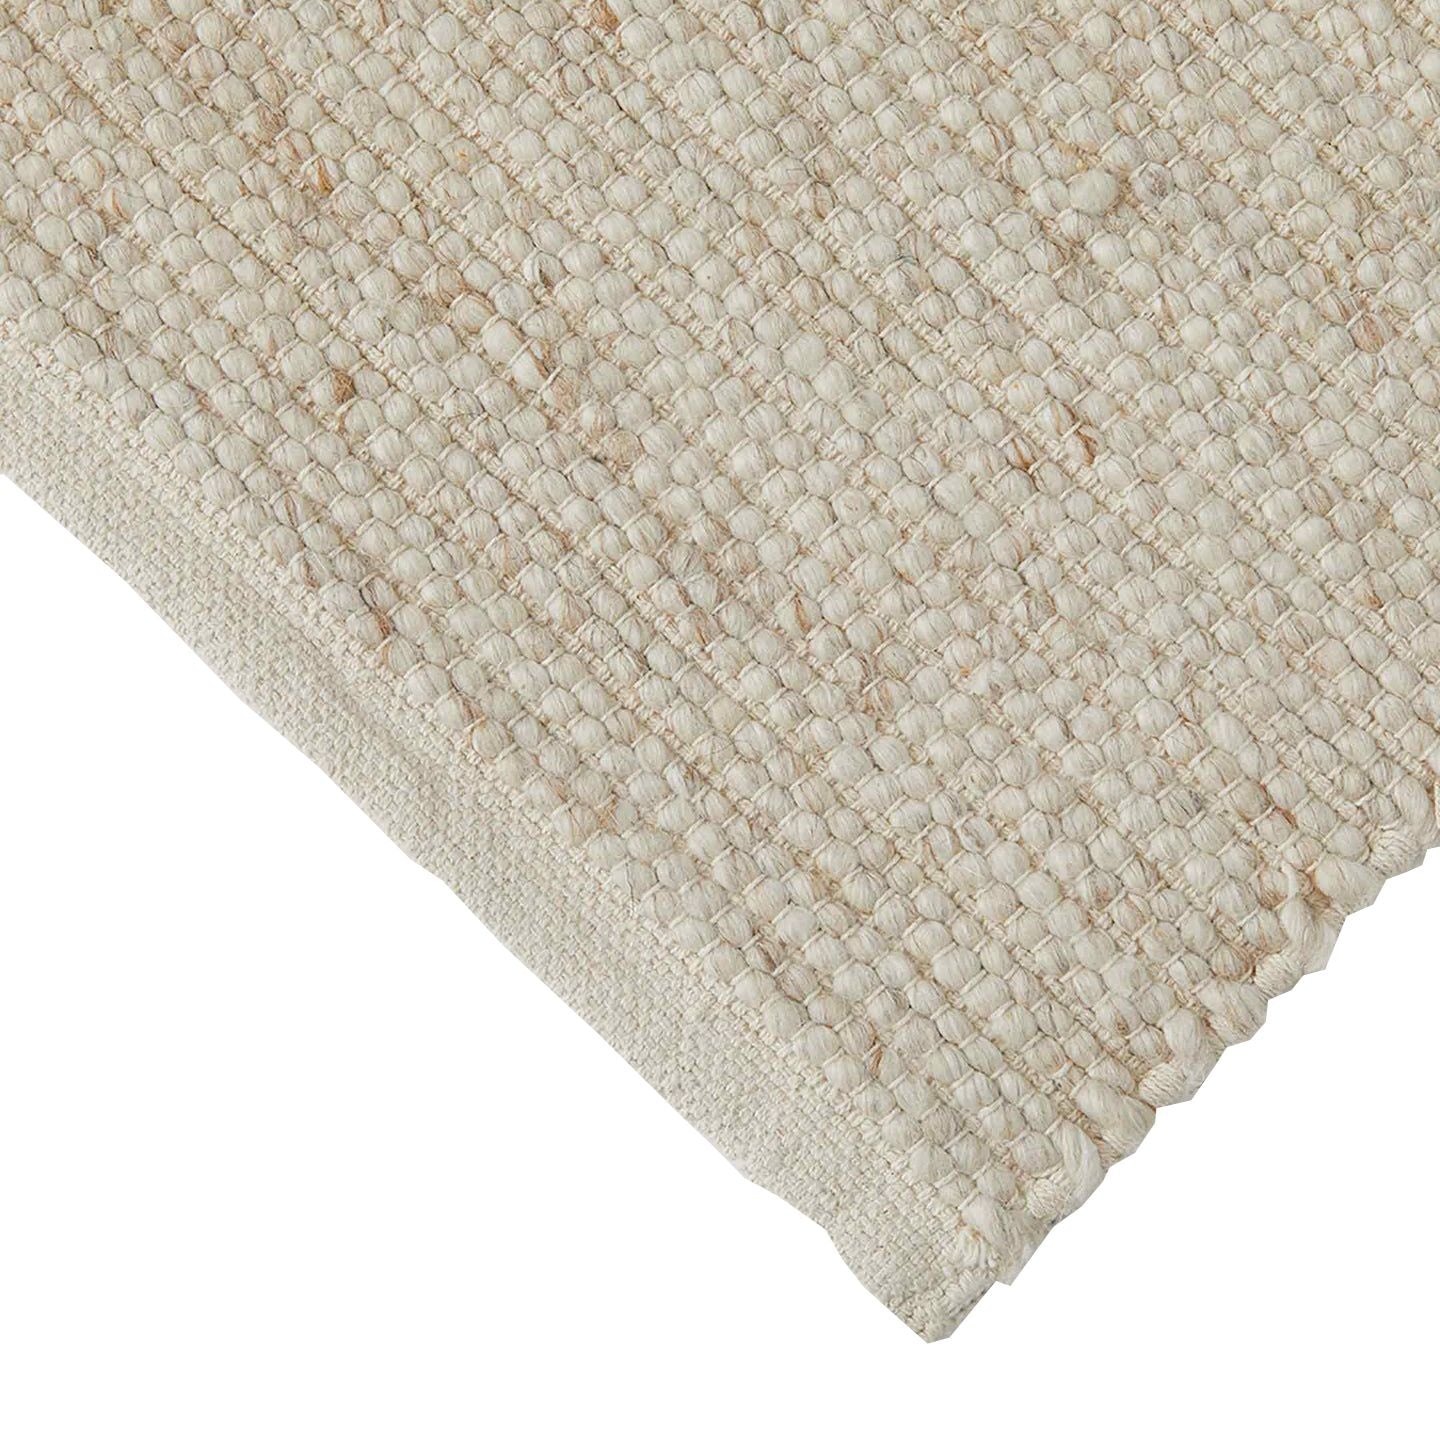 Weave Andes wool cotton rug sandstorm 200x300cm